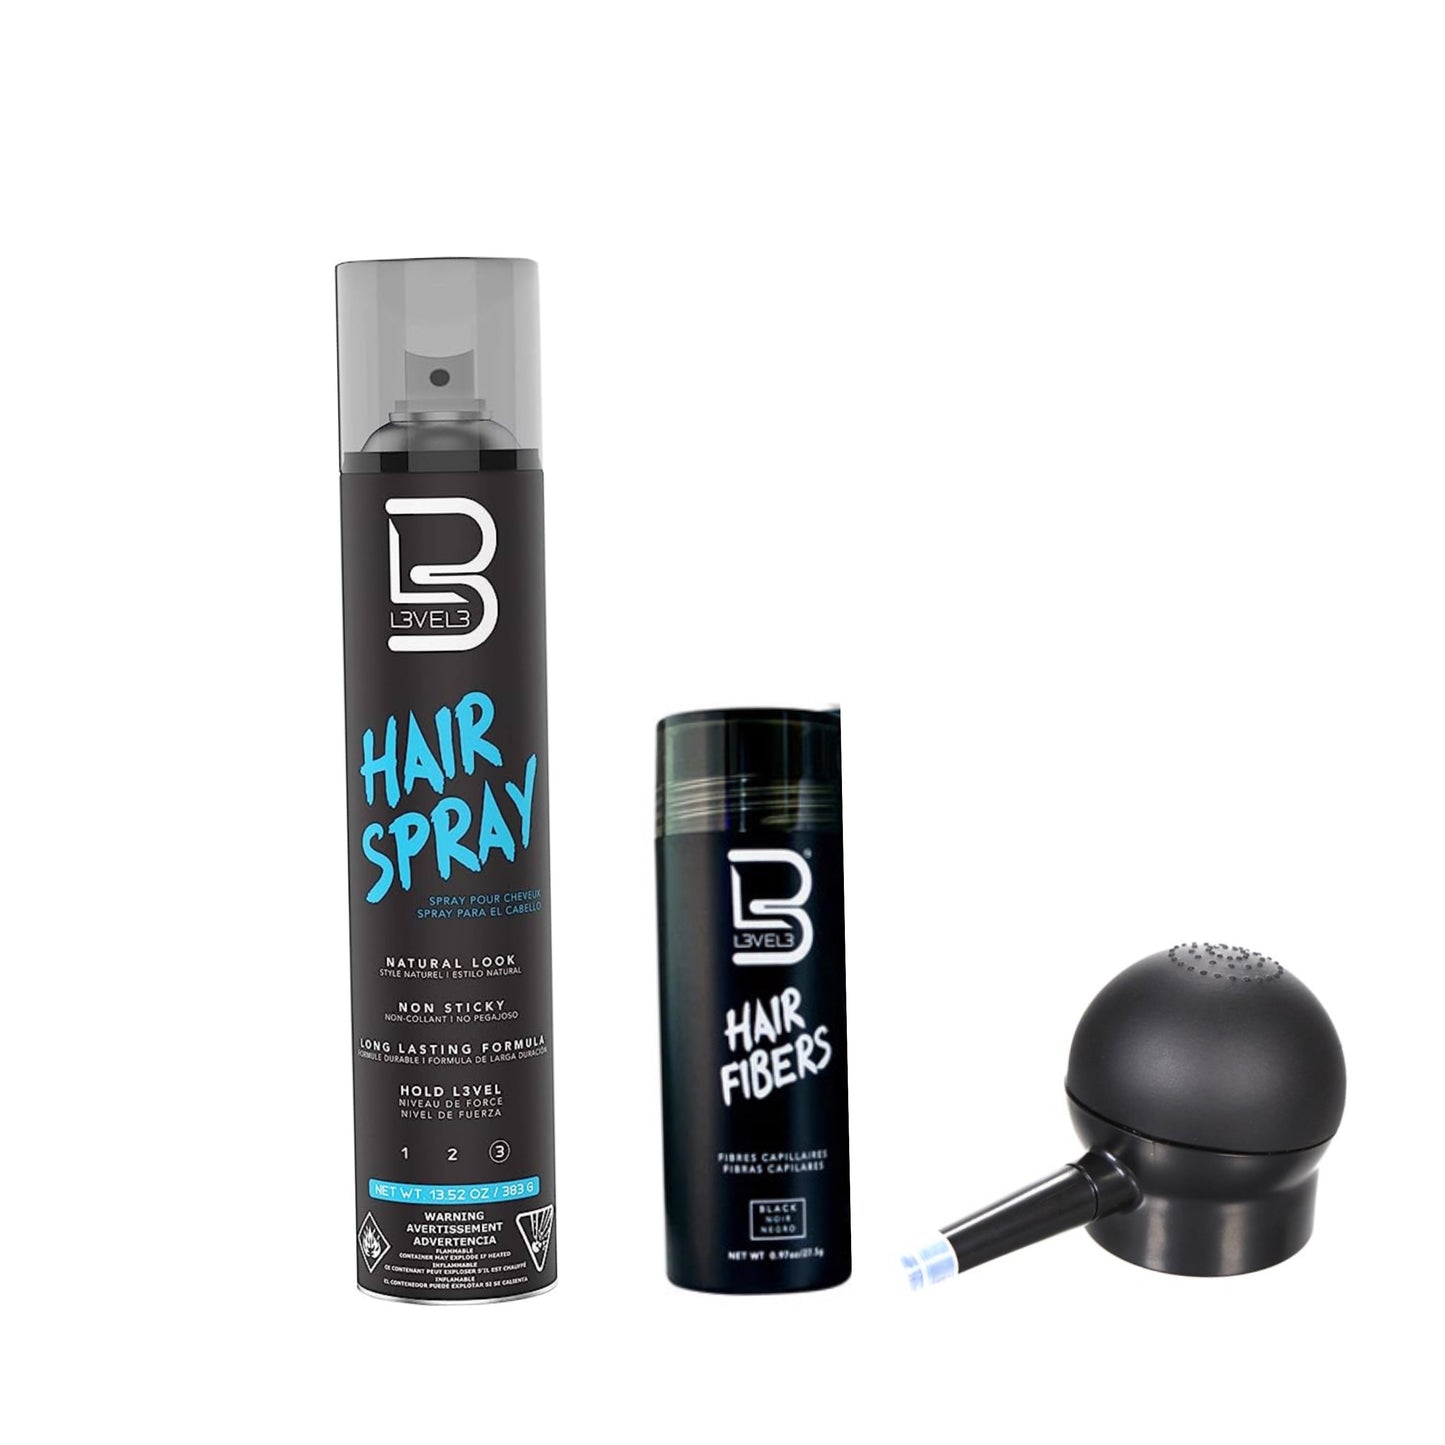 Level 3 hair spray, Fibers and Fiber pump